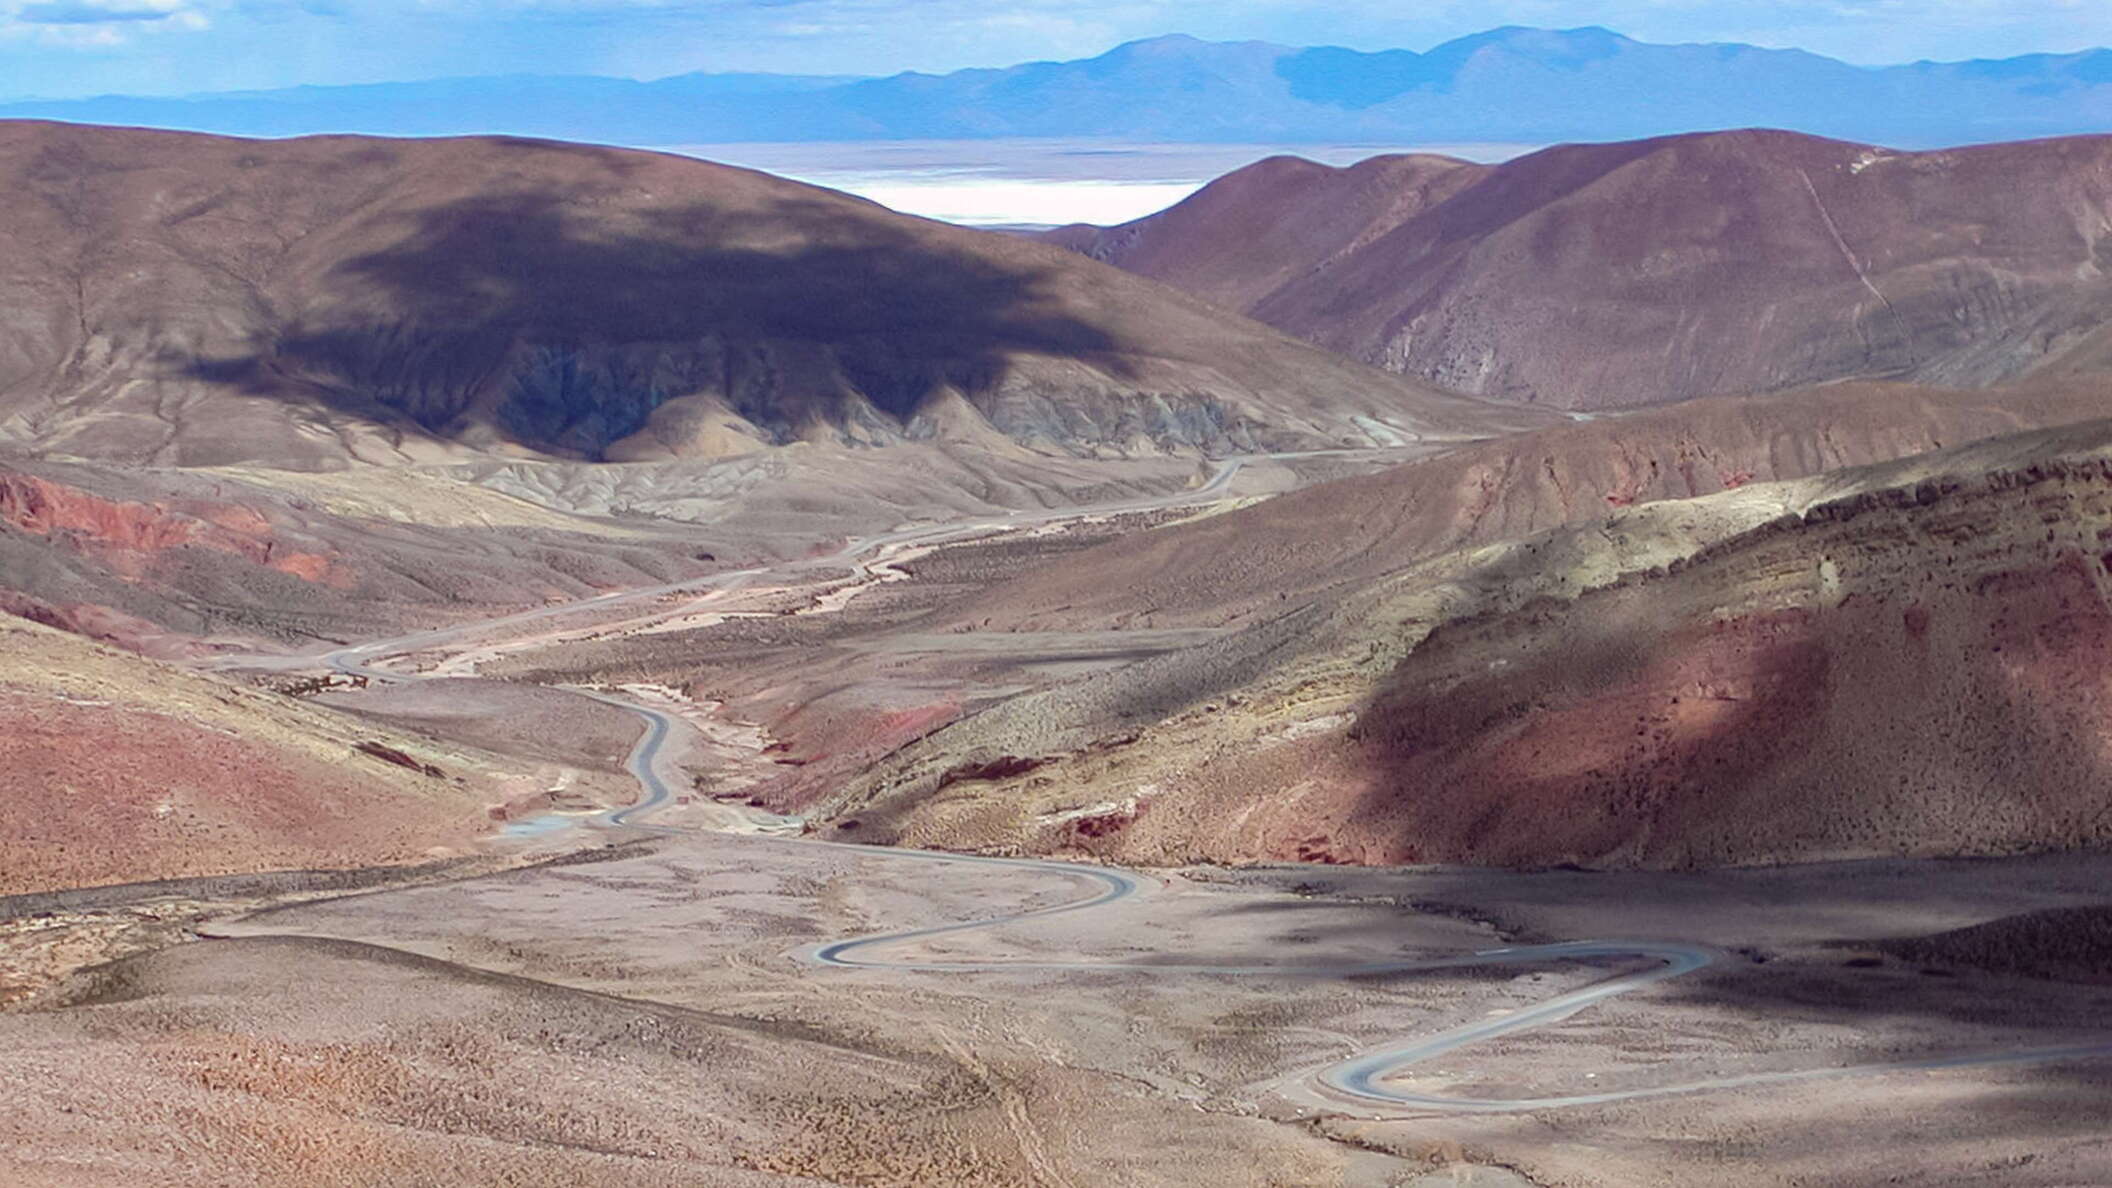 Altiplano with Salinas Grandes